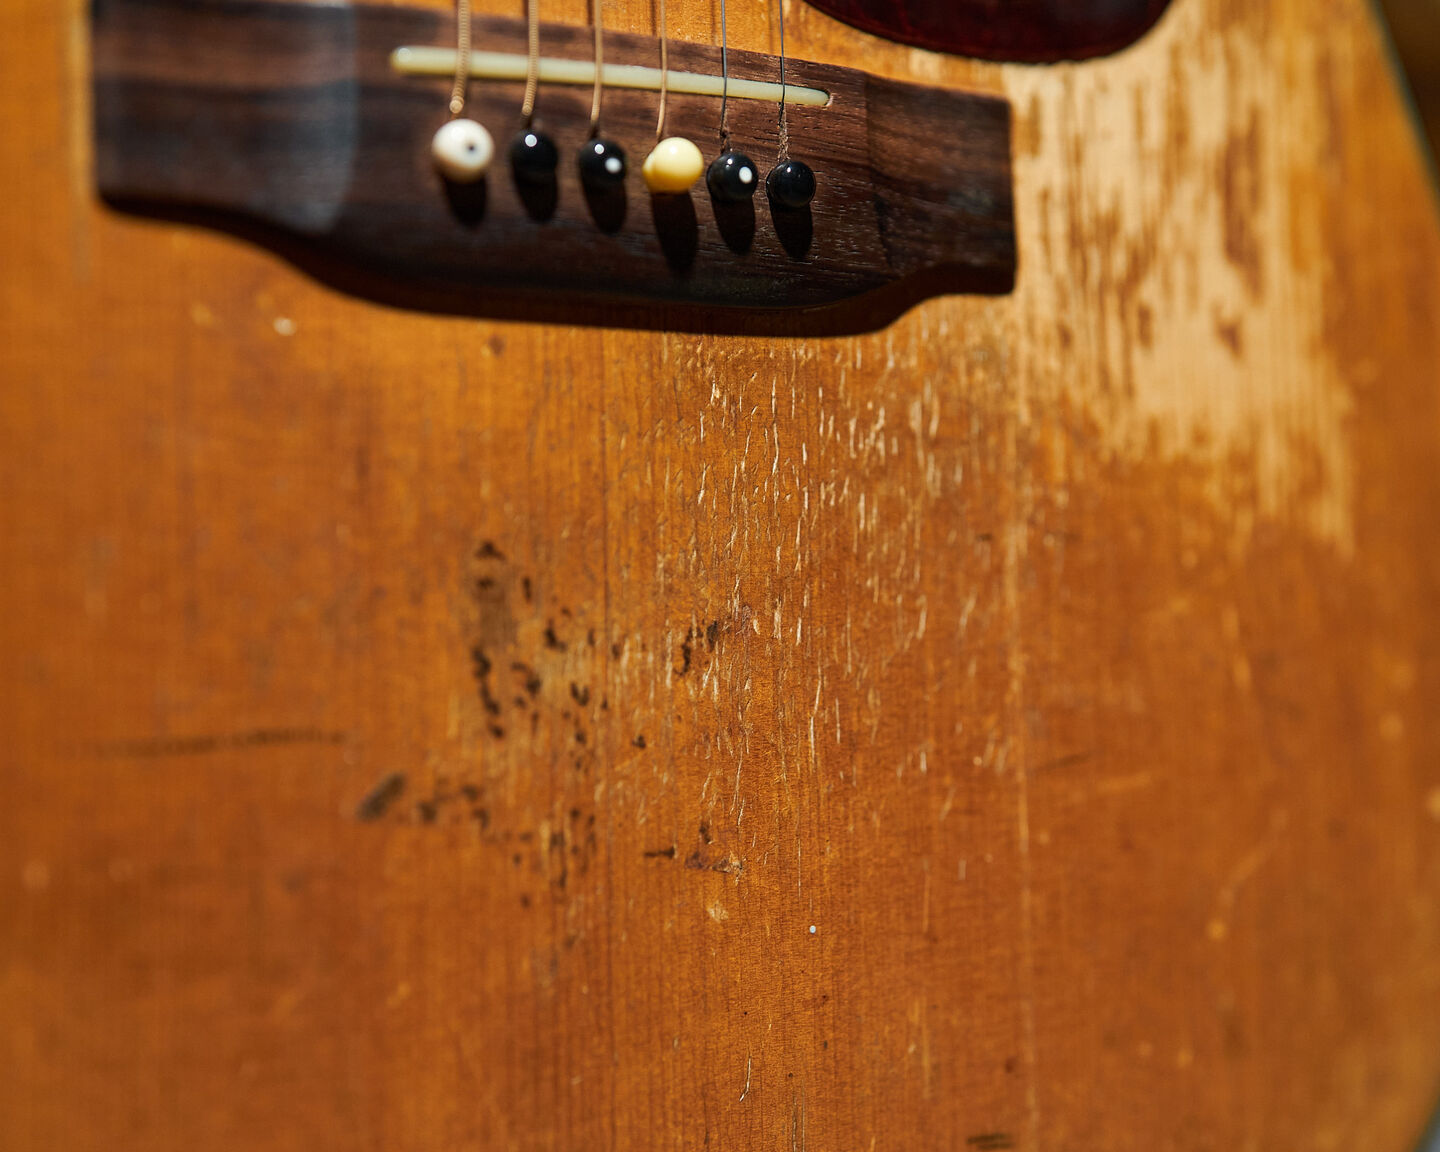 Closeup photo of the bridge of an acoustic guitar